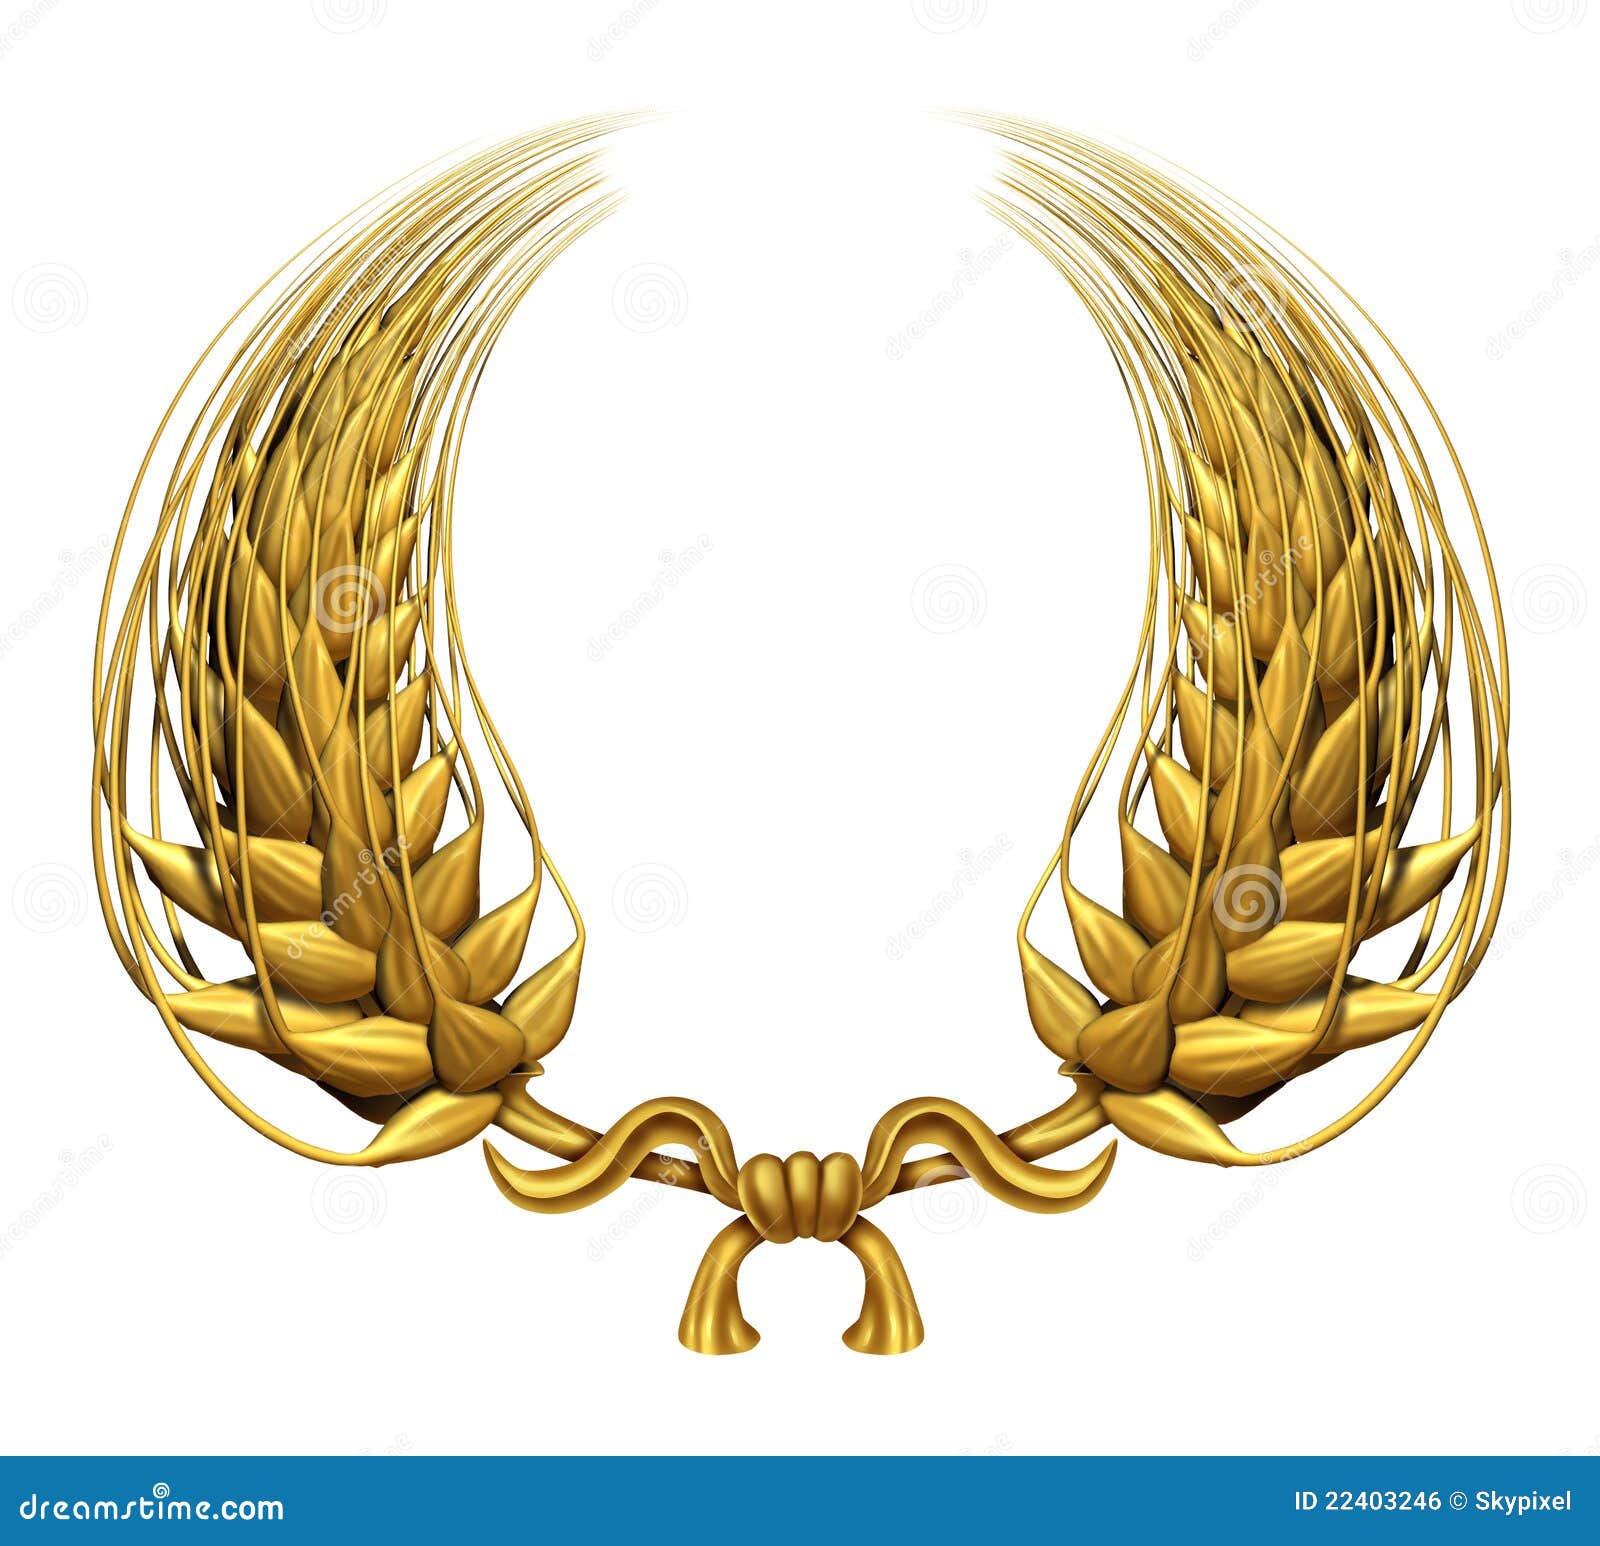 Gold Laurel Wreath Of Golden Wheat Stock Illustration - Illustration of